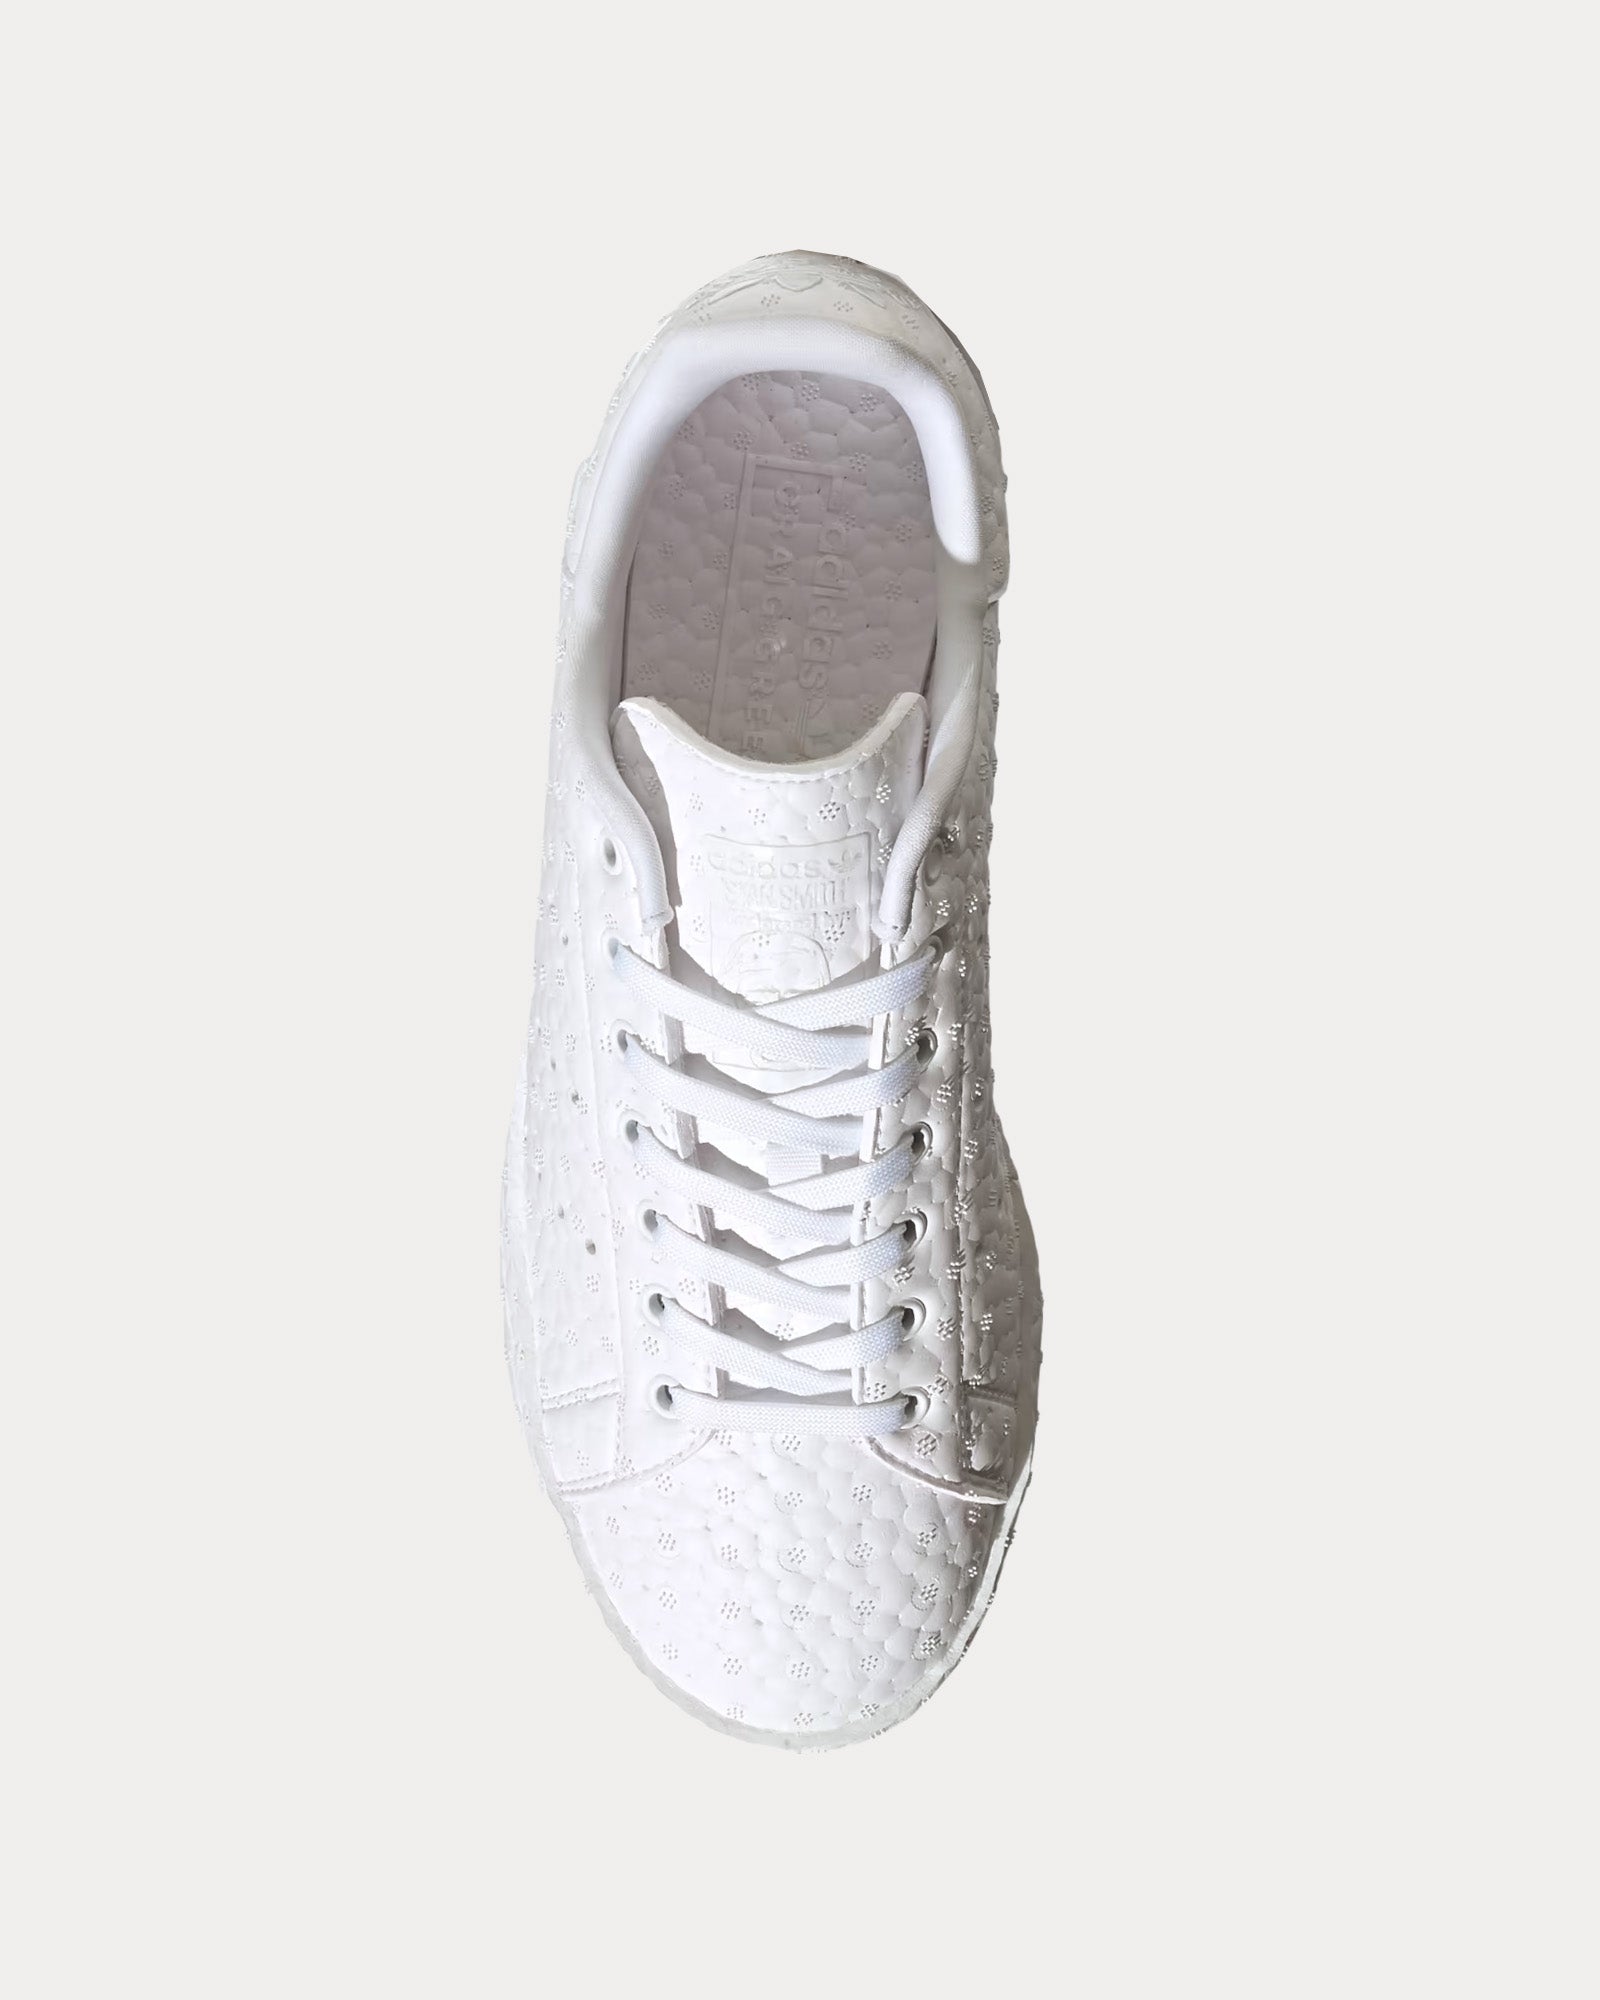 Adidas x Craig Green - Stan Smith Boost Core White / Core White / Core White Low Top Sneakers